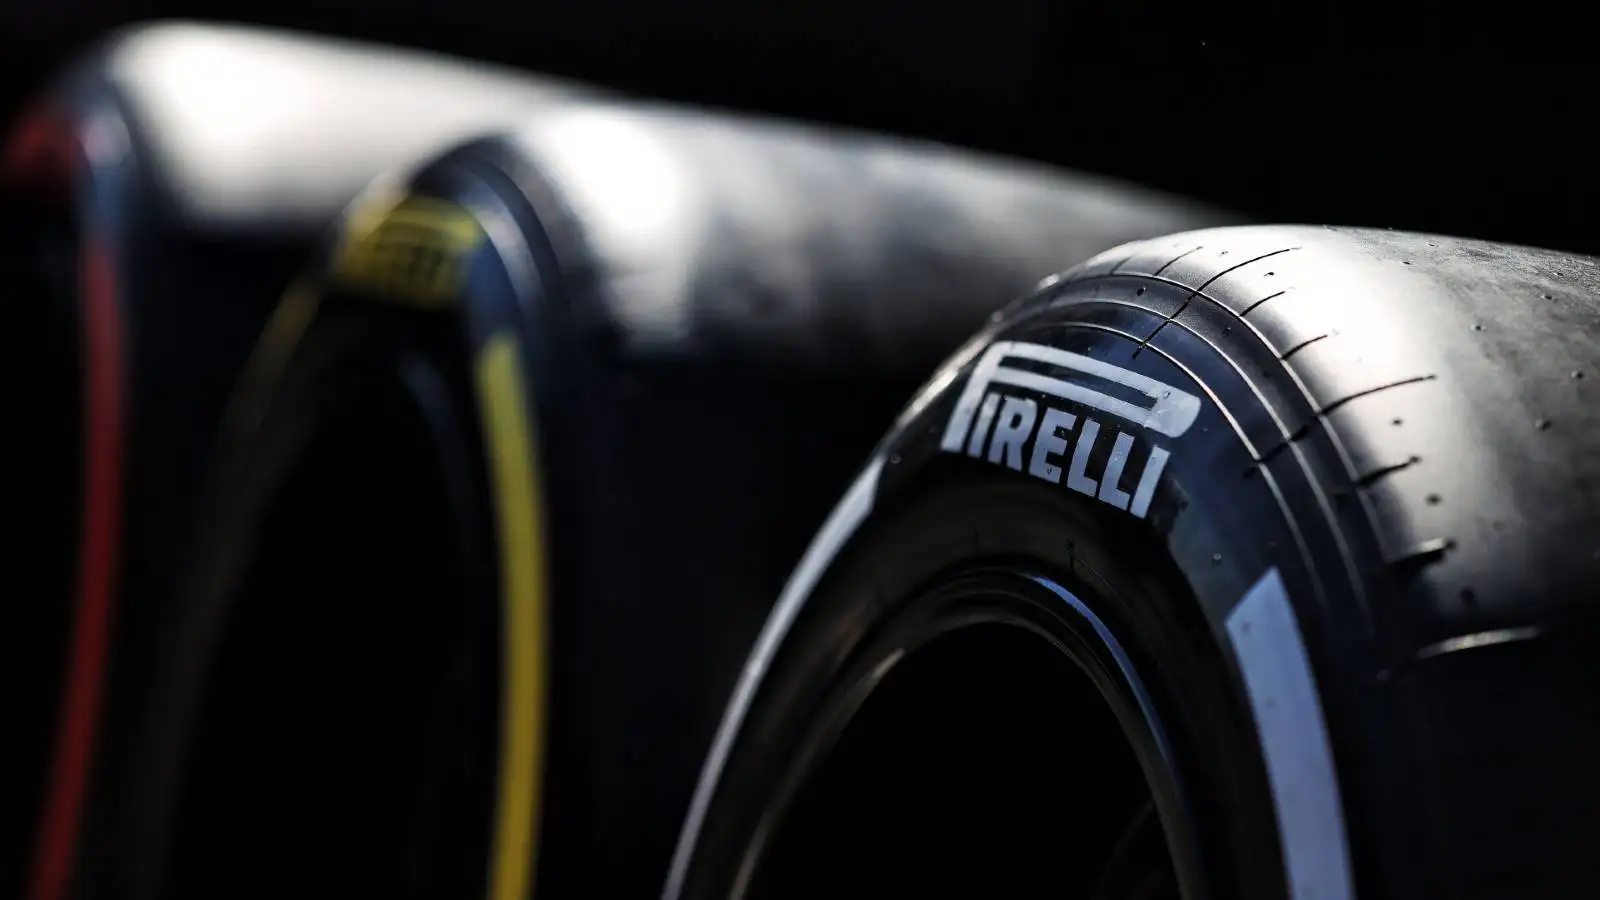 Pirelli hard tyre in focus. Zandvoort September 2022.